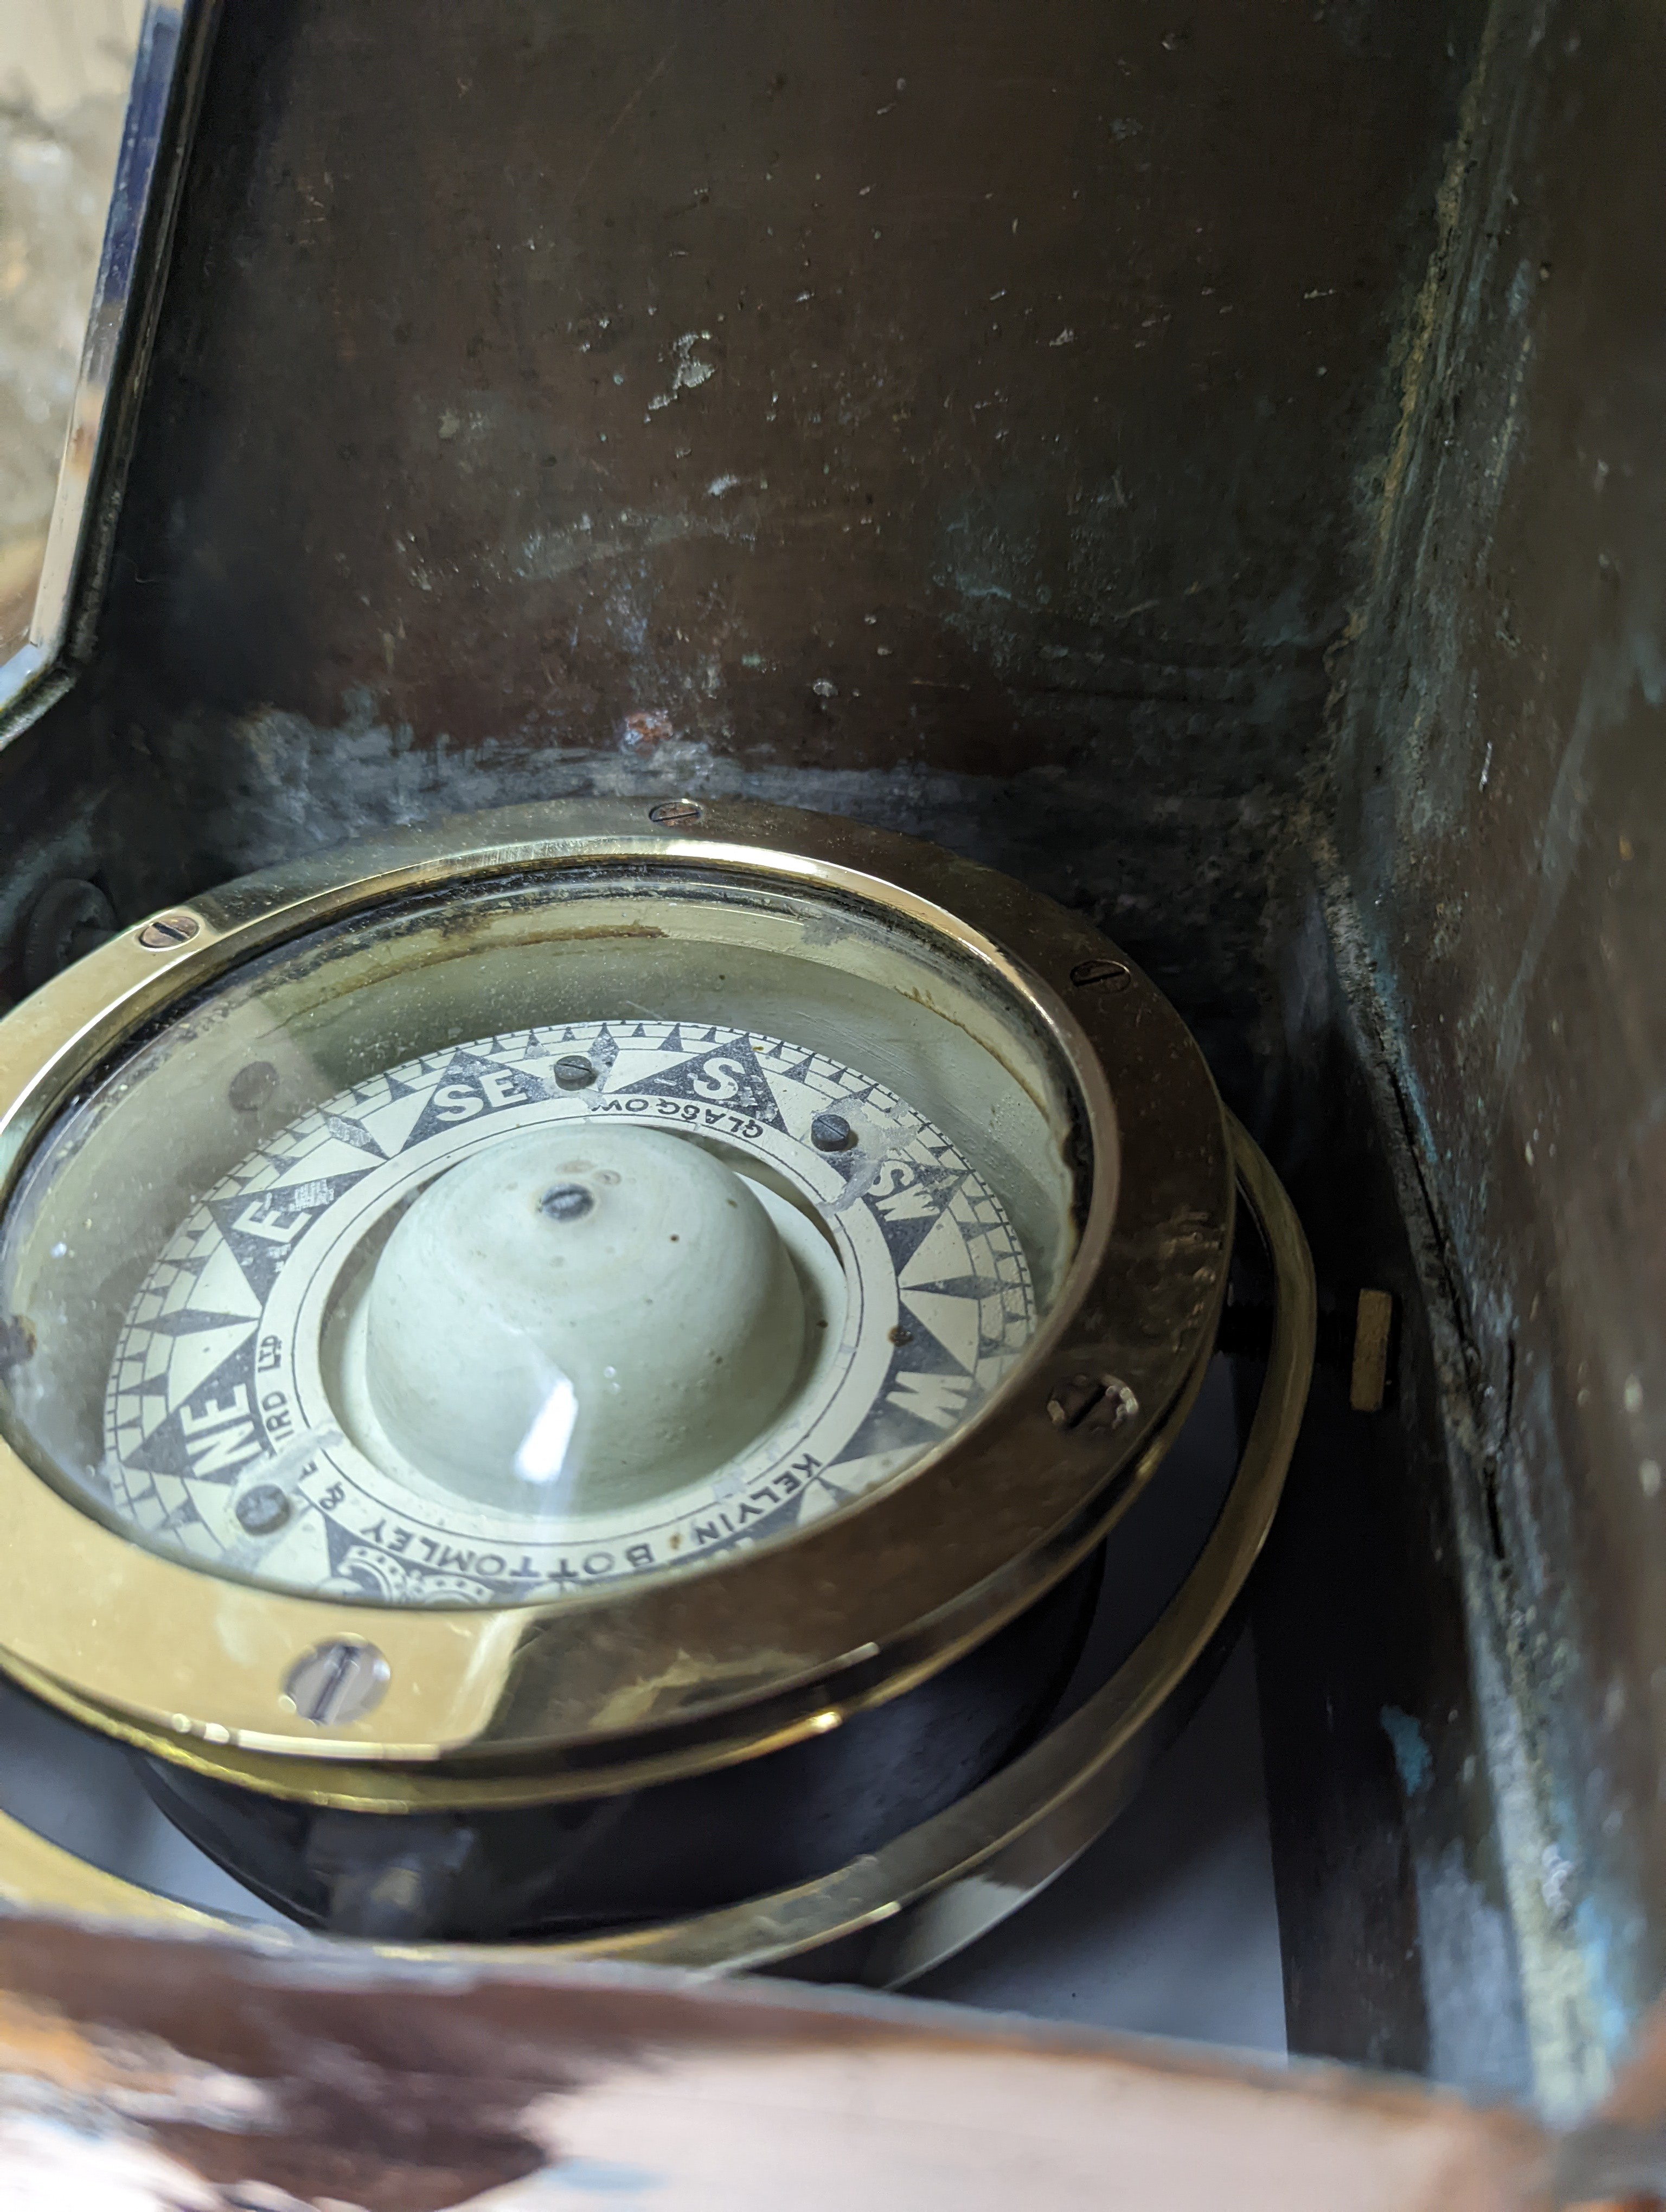 A copper ship's binnacle compass, a brass oil lamp, a brass jug and a copper kettle